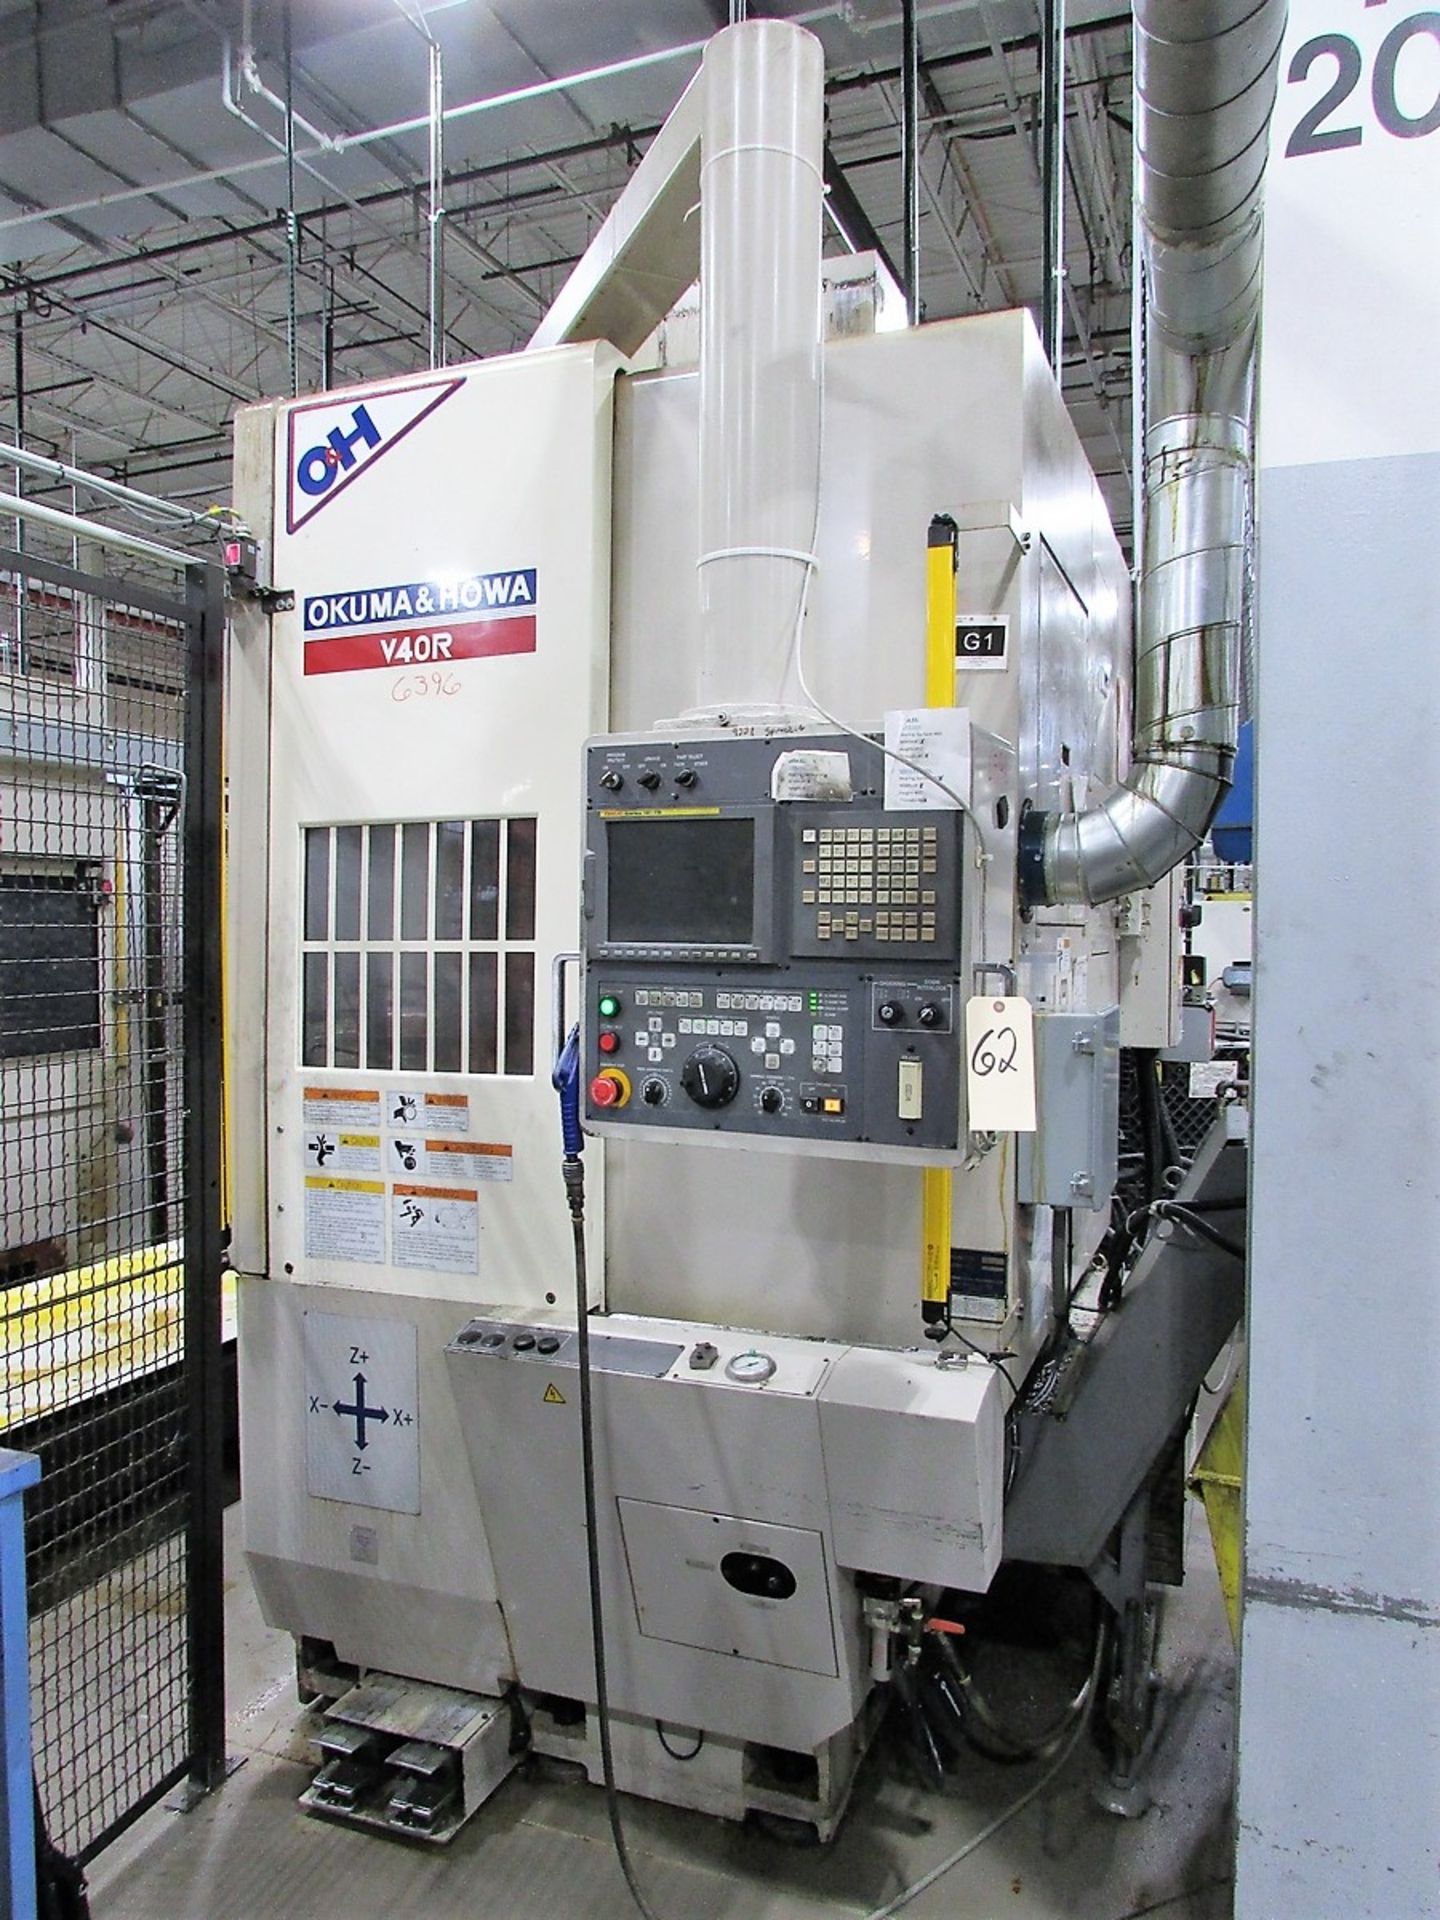 Okuma & Howa V40R CNC Vertical Turning Center